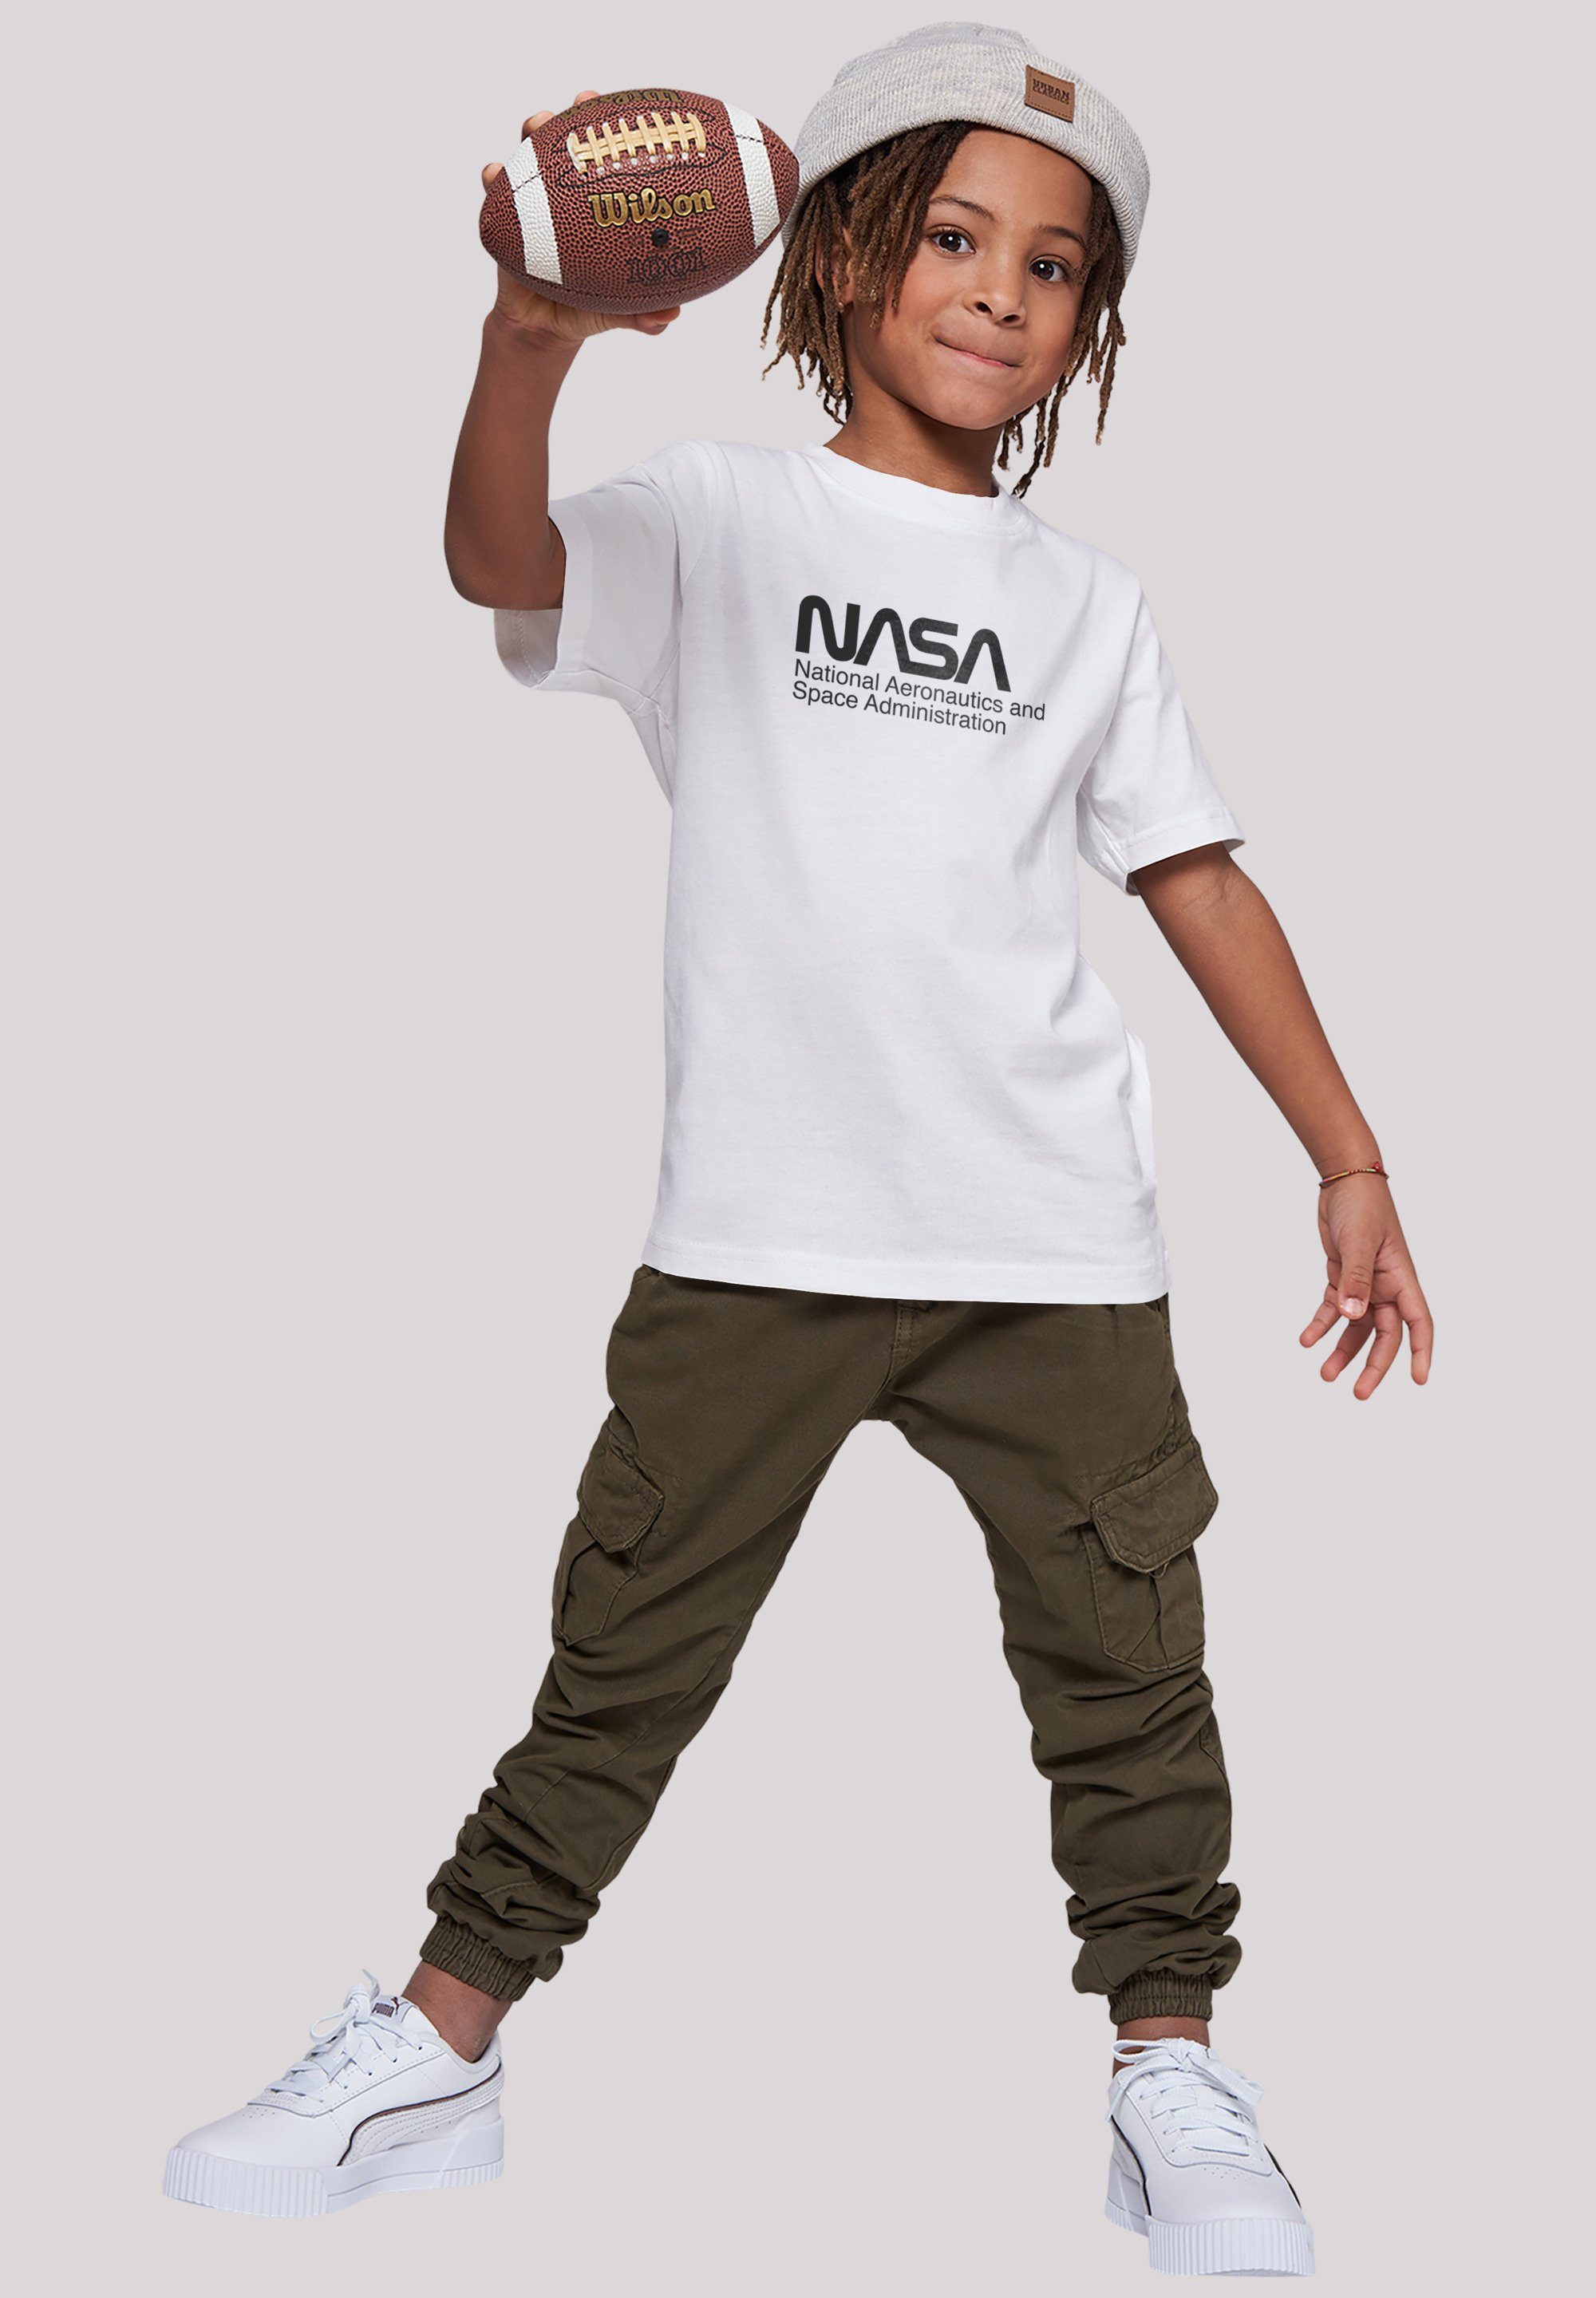 F4NT4STIC One T-Shirt Tone weiß NASA Logo Print